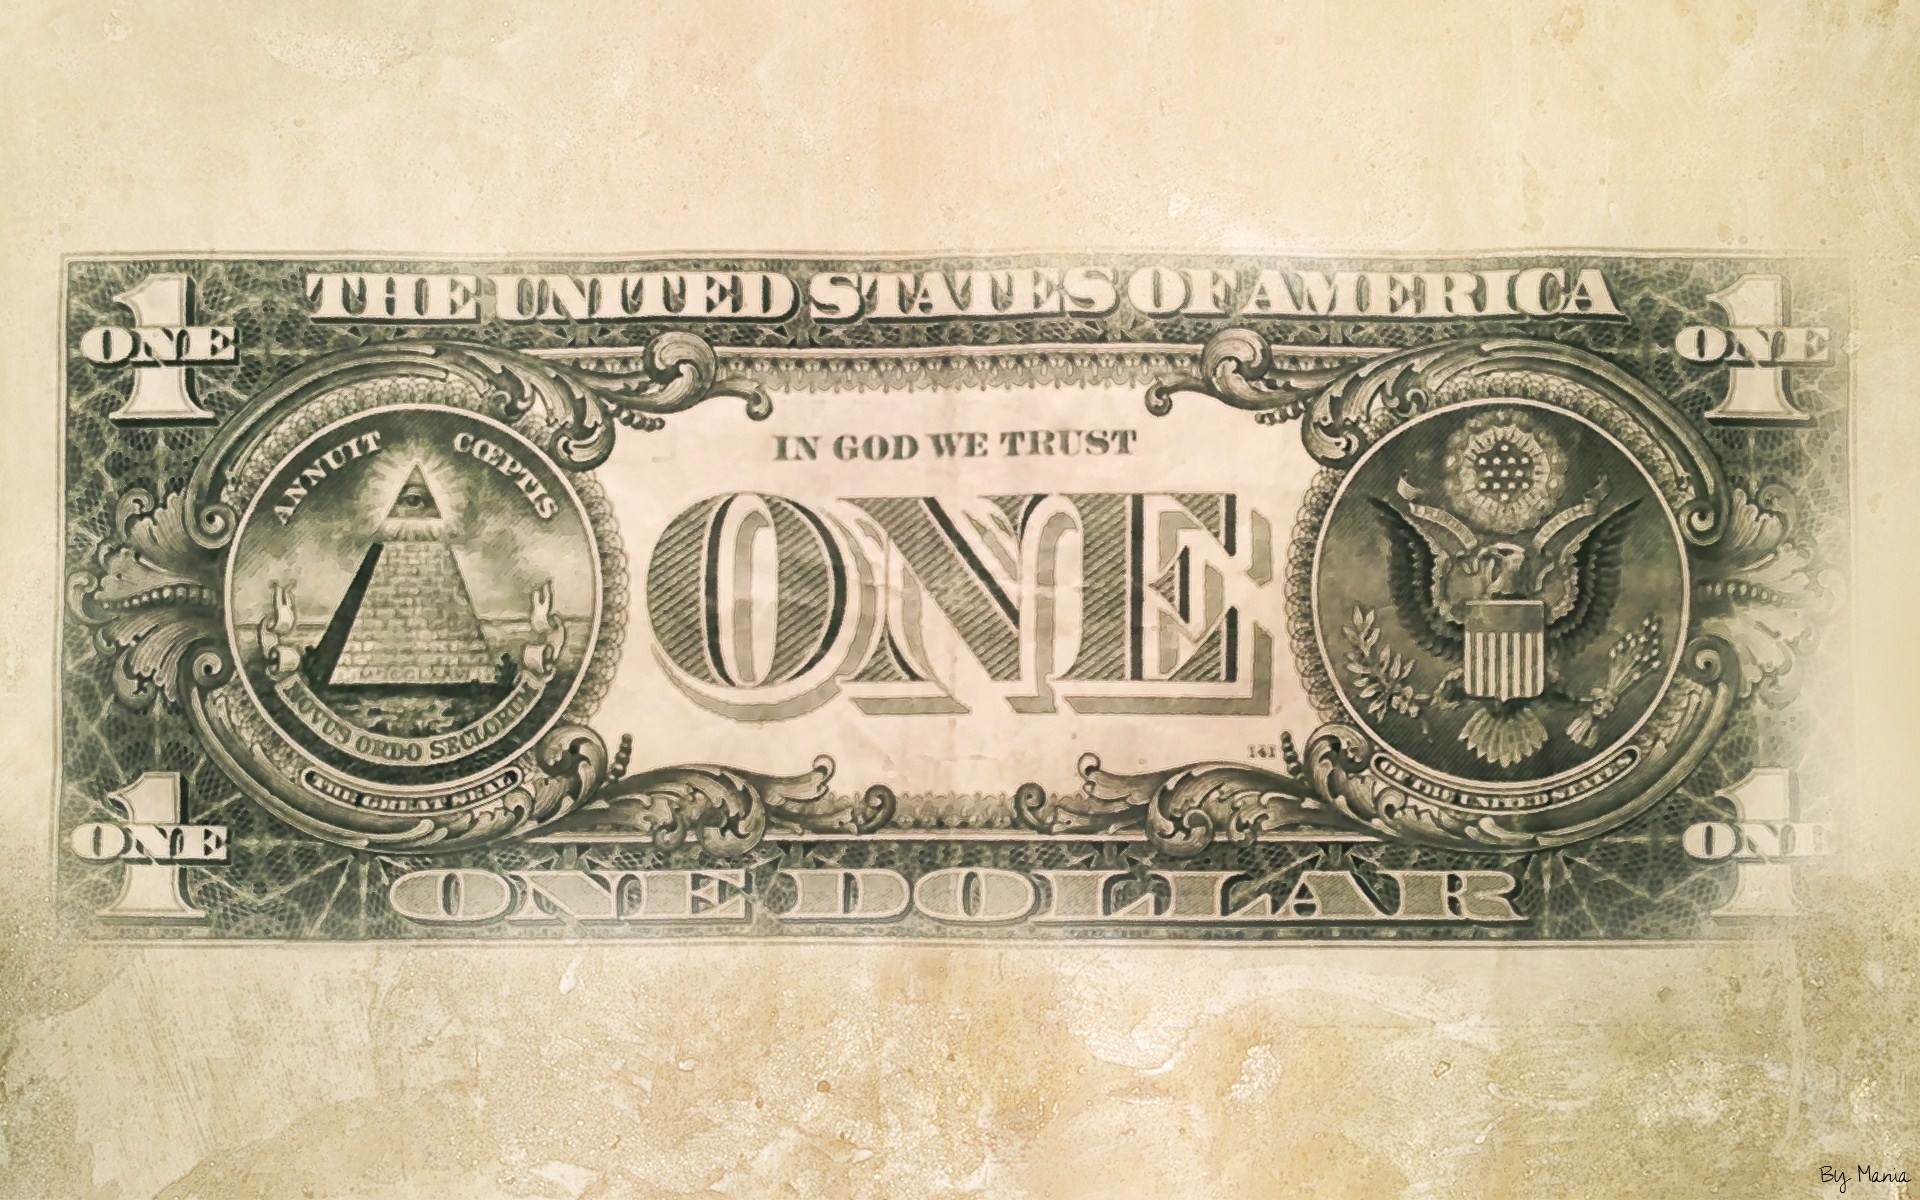 Humanite One dollar bill